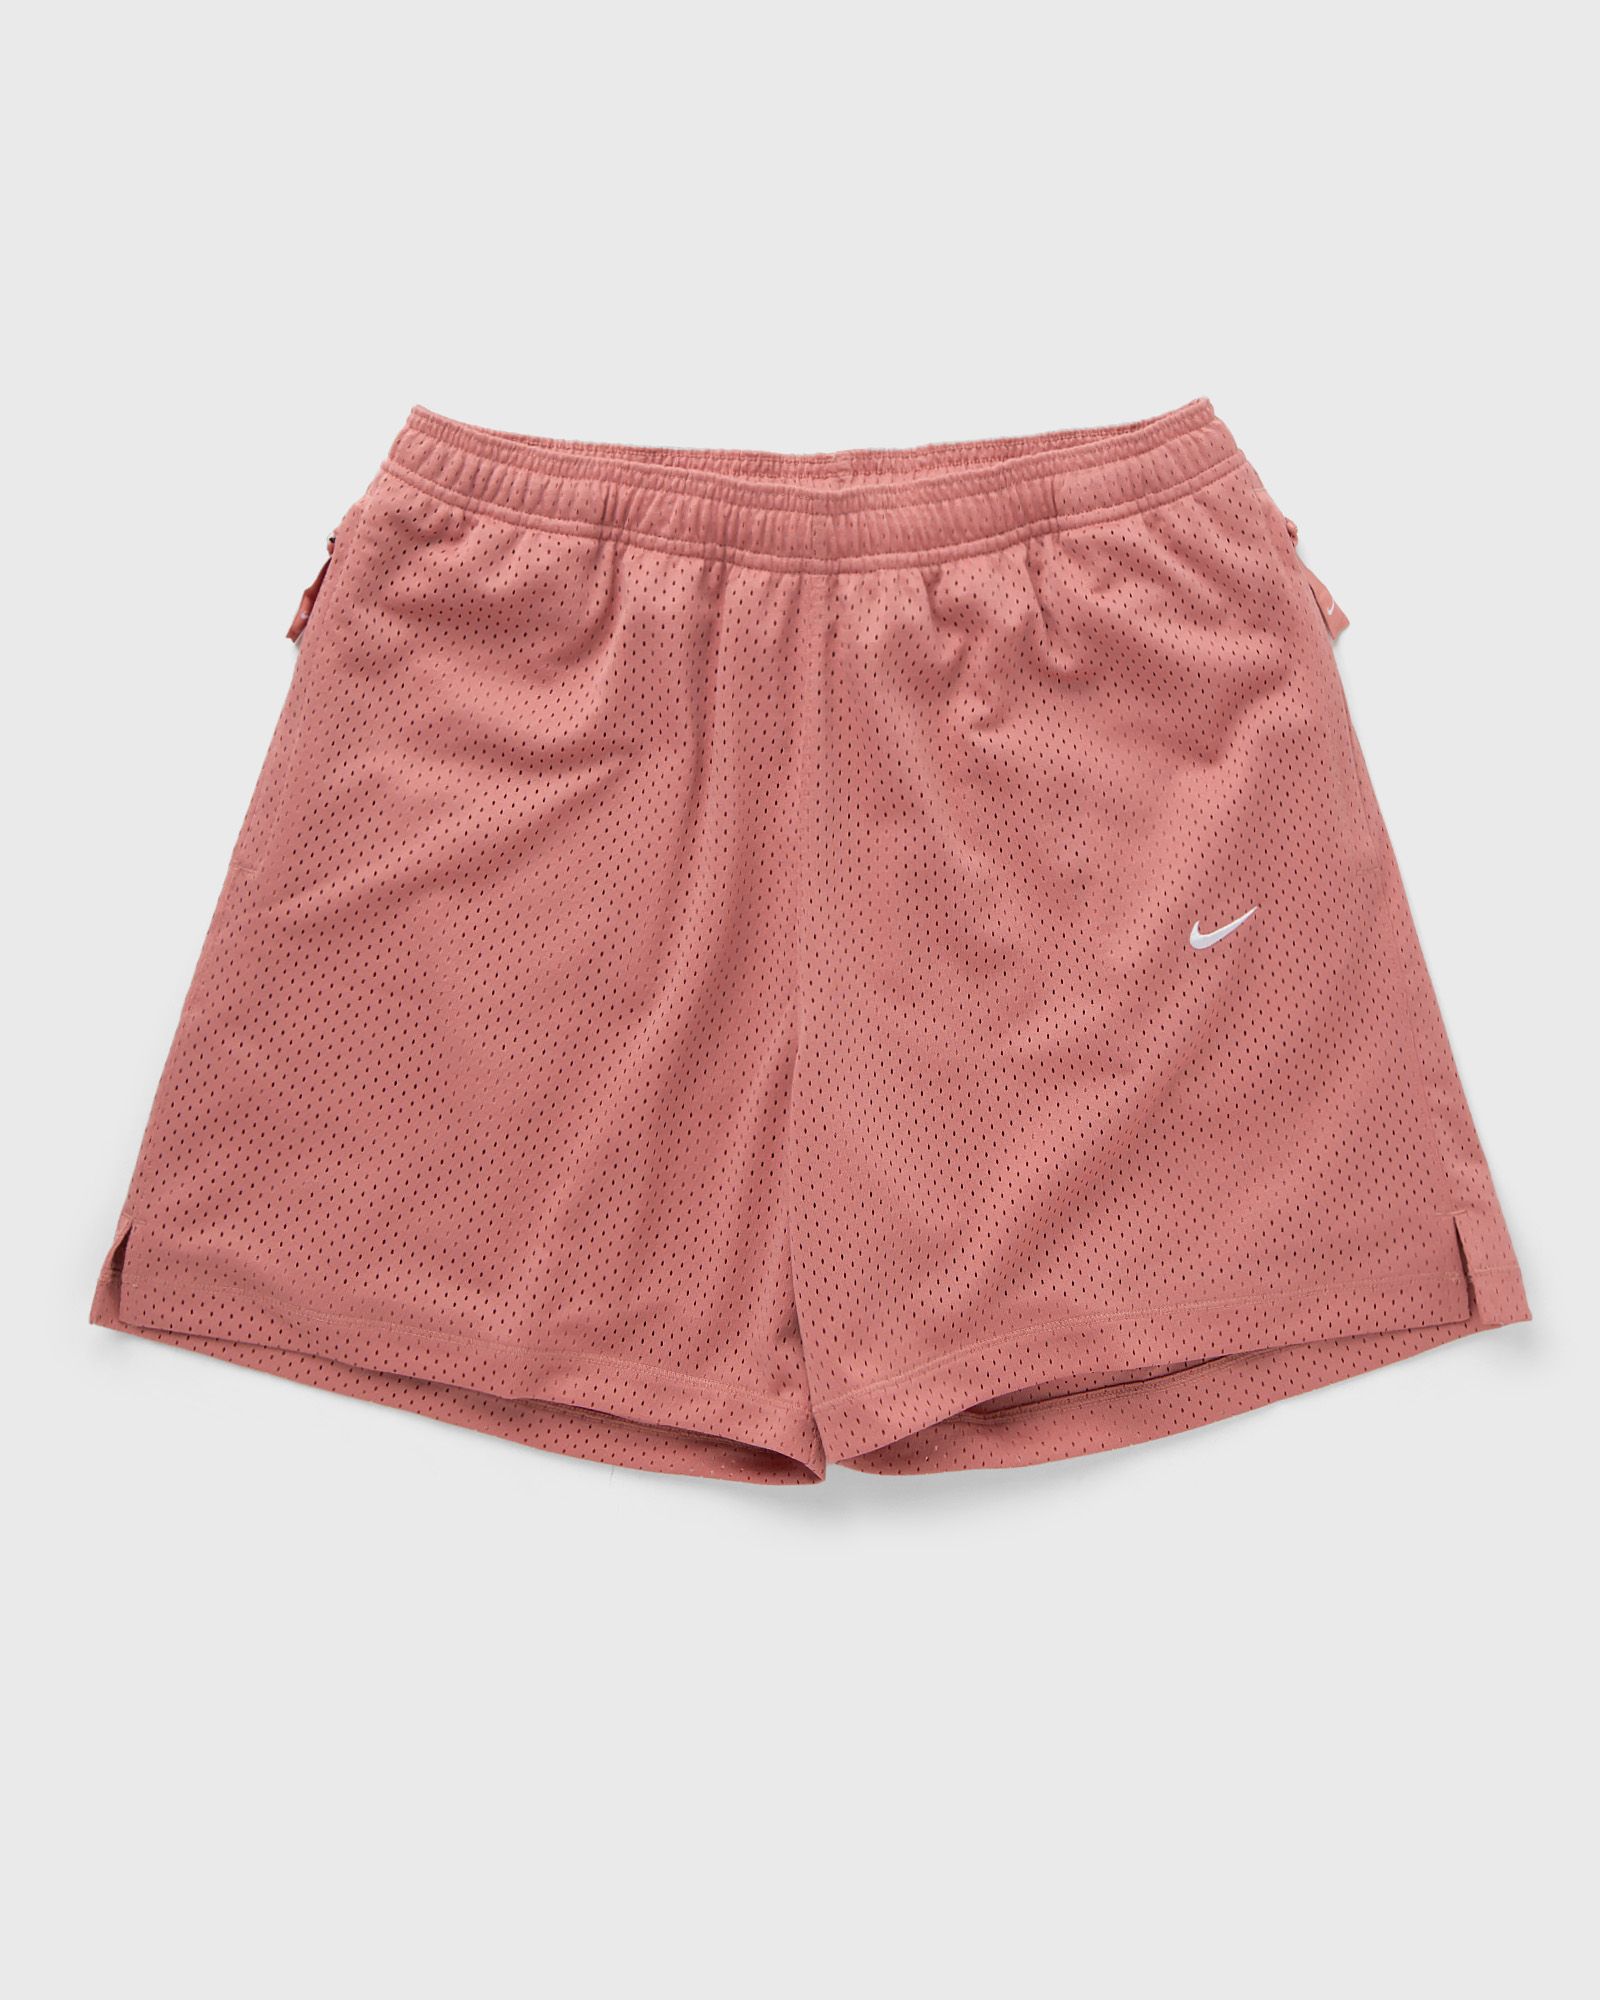 Nike - solo swoosh mesh shorts men sport & team shorts red in größe:xxl